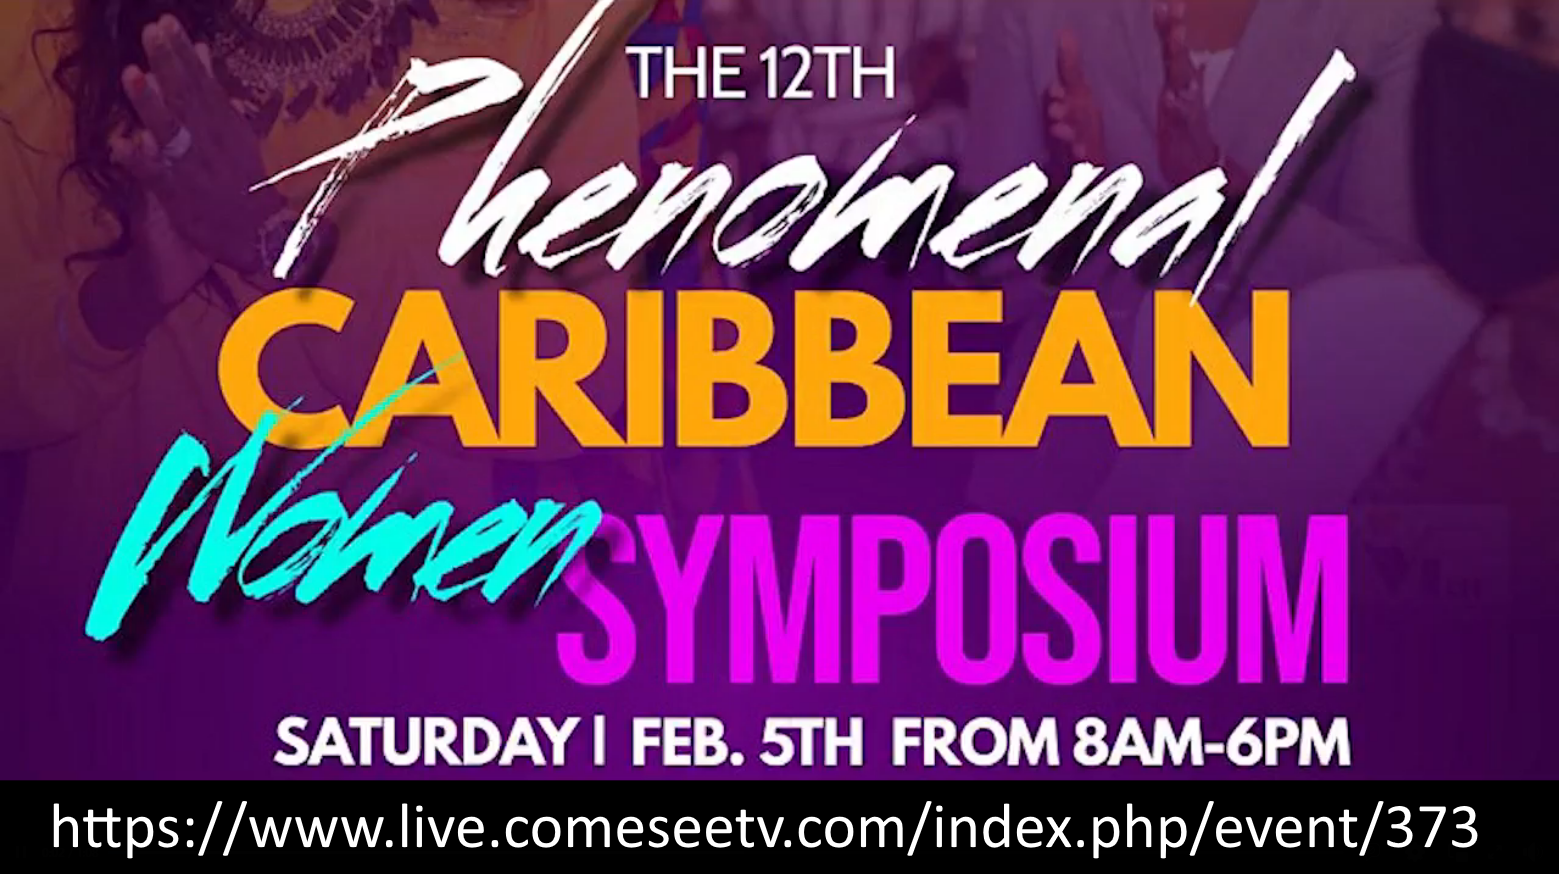 VFInc presents the 12th Annual Phenomenal Caribbean Women's Symposium